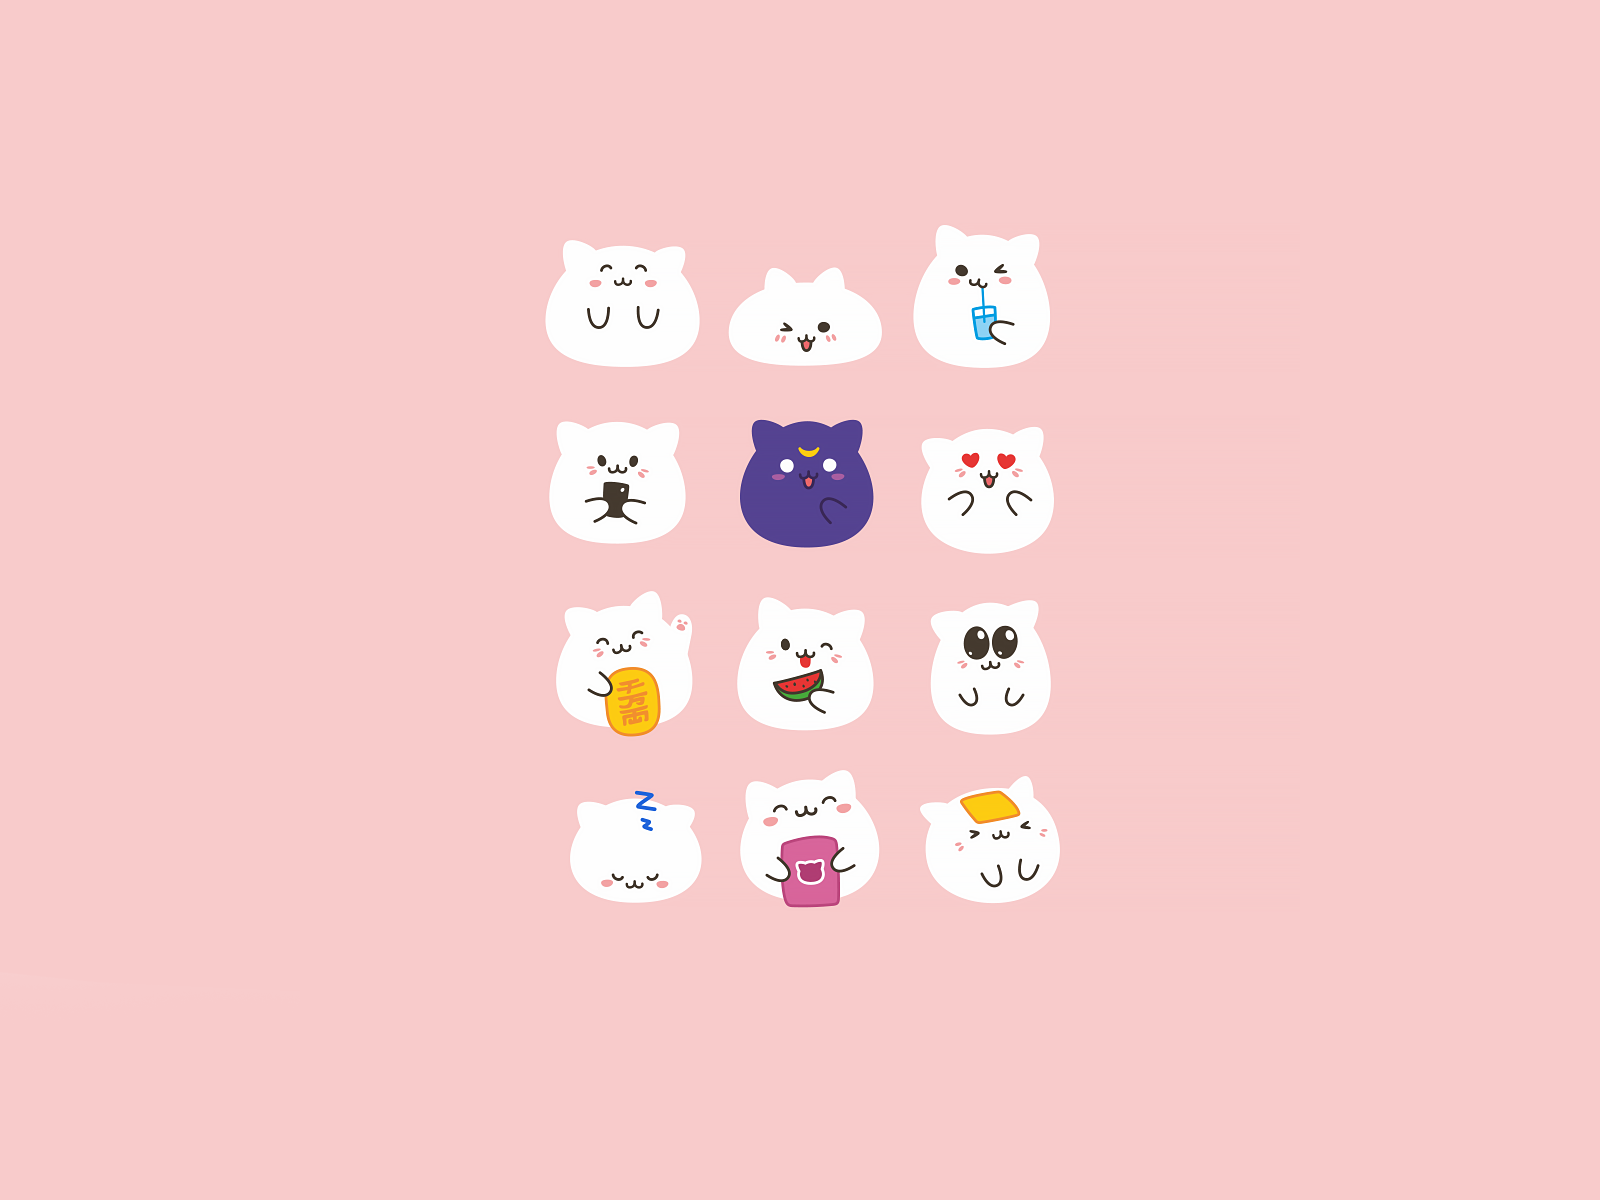 Funny cat emoji wallpaper by IAMJAYPRAKASH  Download on ZEDGE  0169